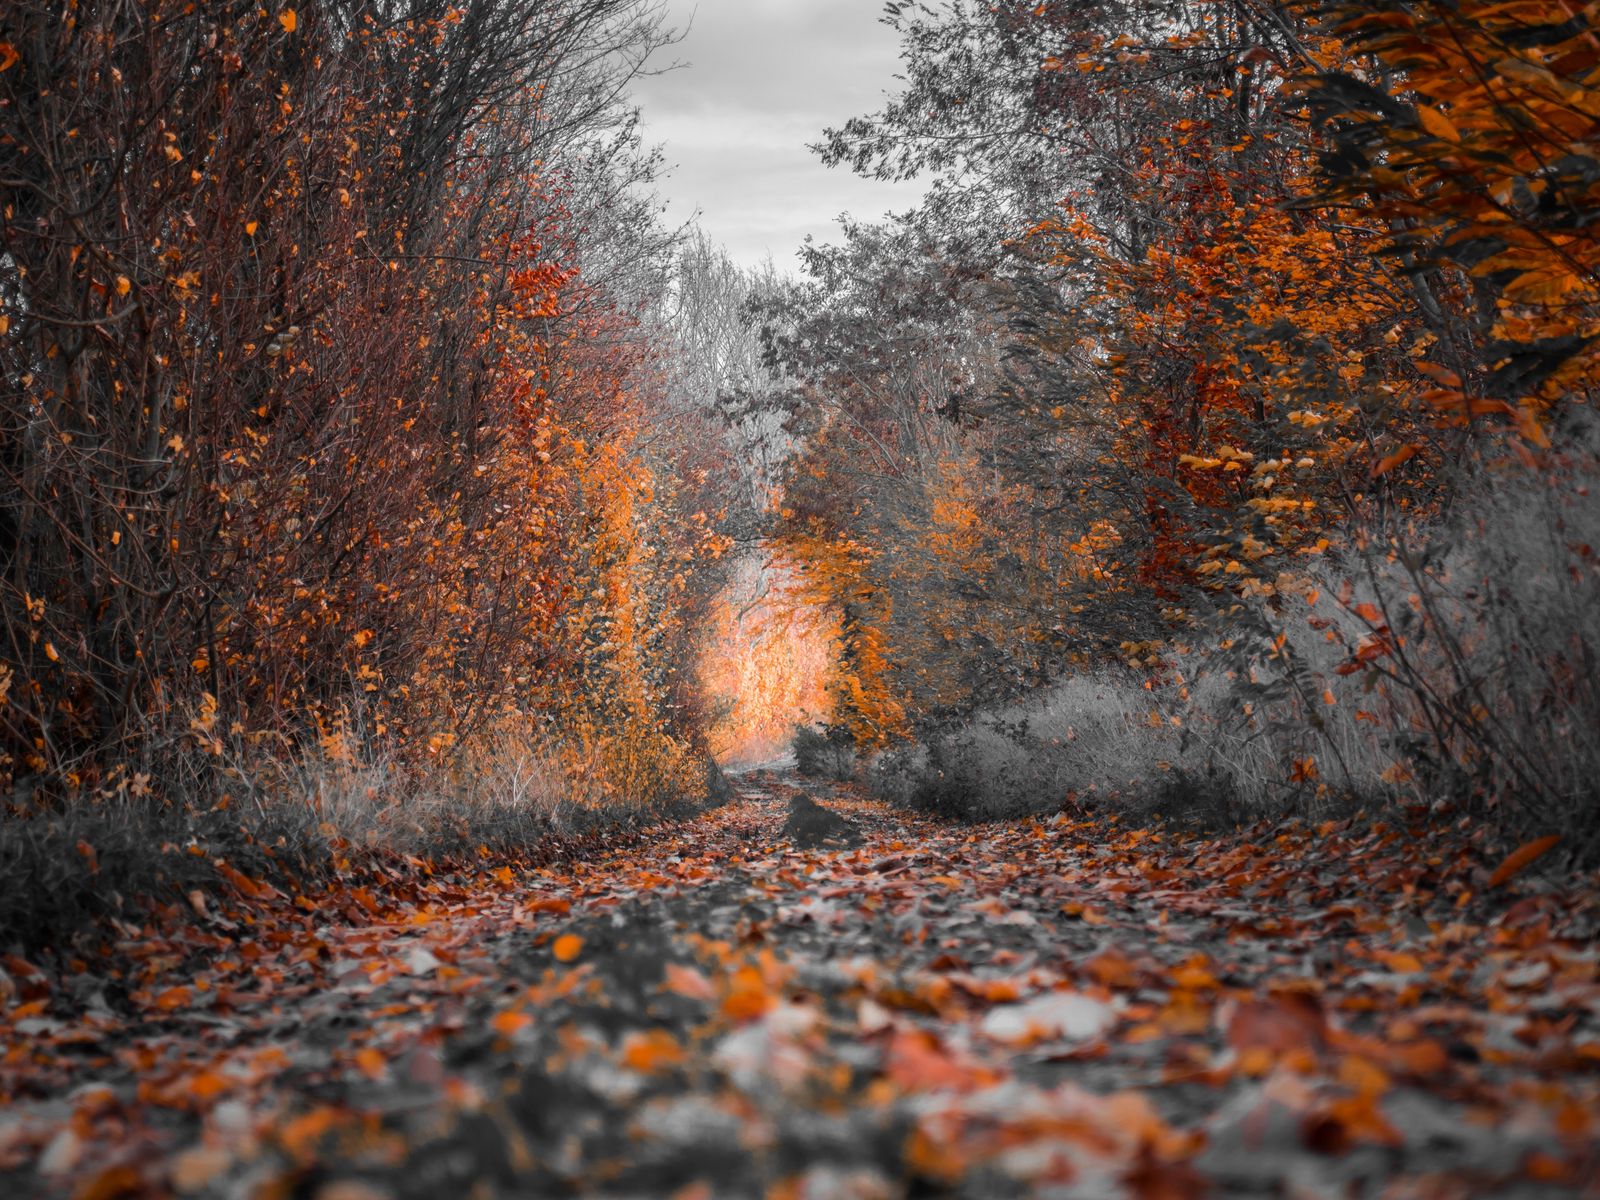 Download wallpaper 1600x1200 autumn, trees, foliage, autumn colors standard  4:3 hd background